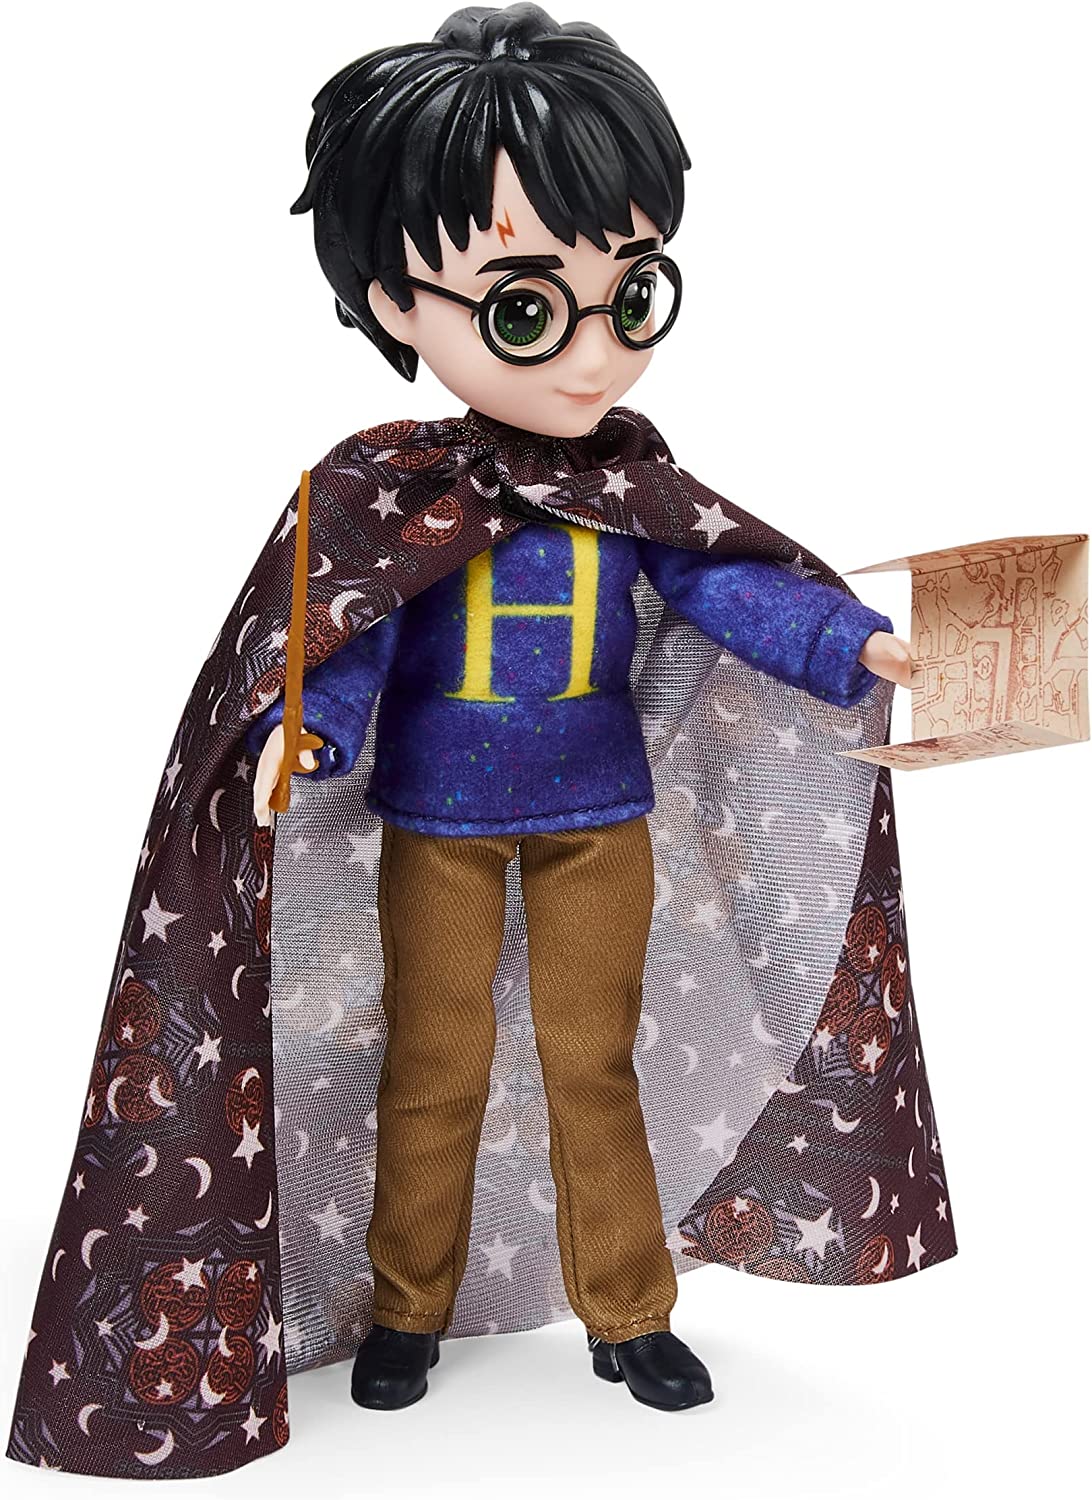 Hagrid Charms Mini Wizarding World Harry Potter Plush Doll Stuffed Toy 4.5